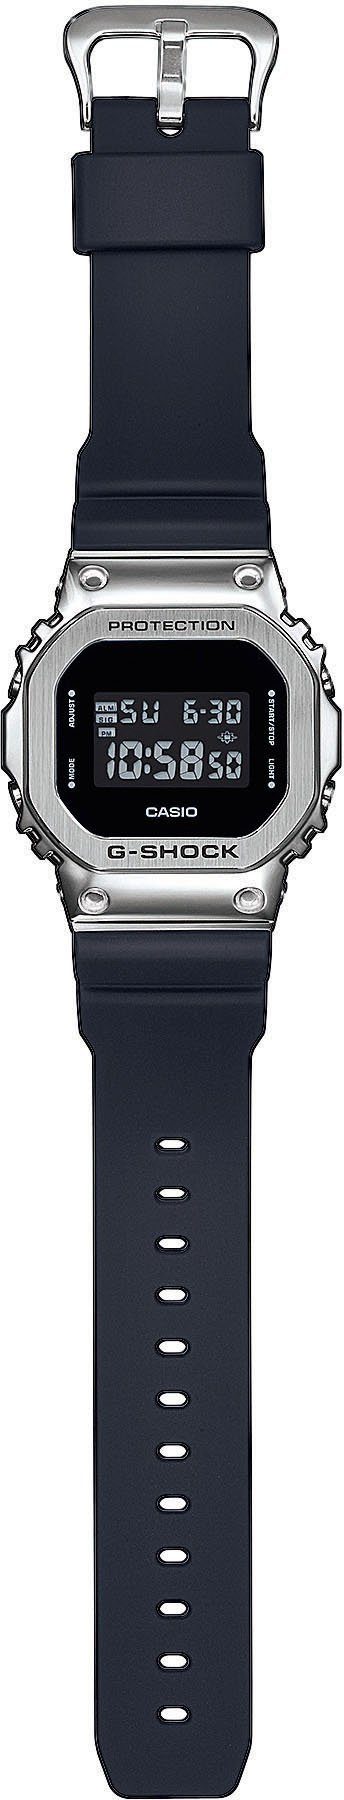 GM-5600-1ER G-SHOCK CASIO Chronograph